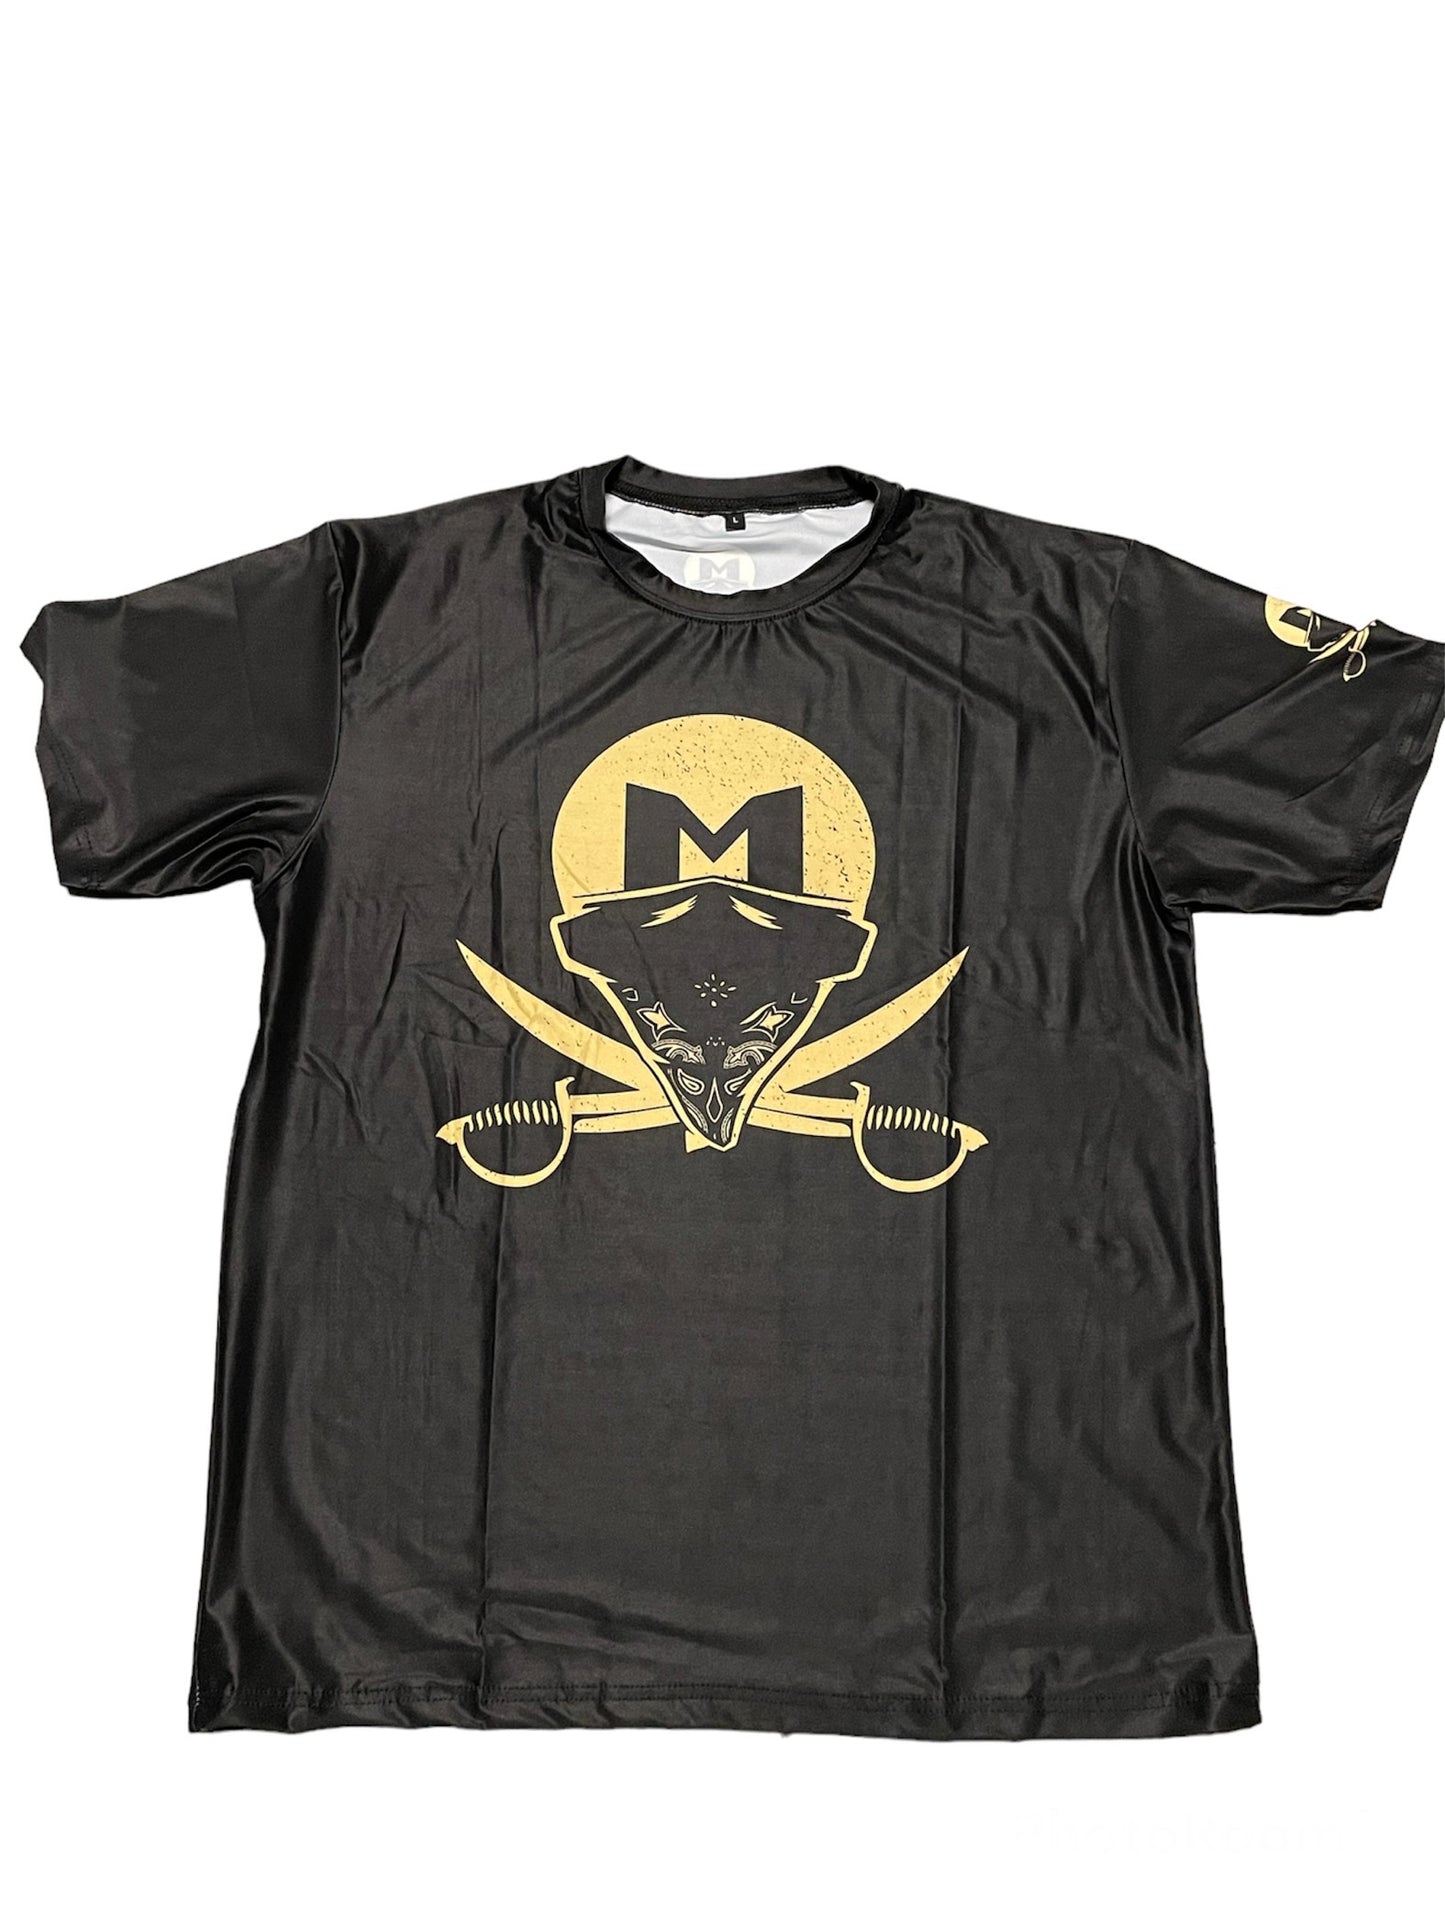 The Mutiny Bandit T-shirt